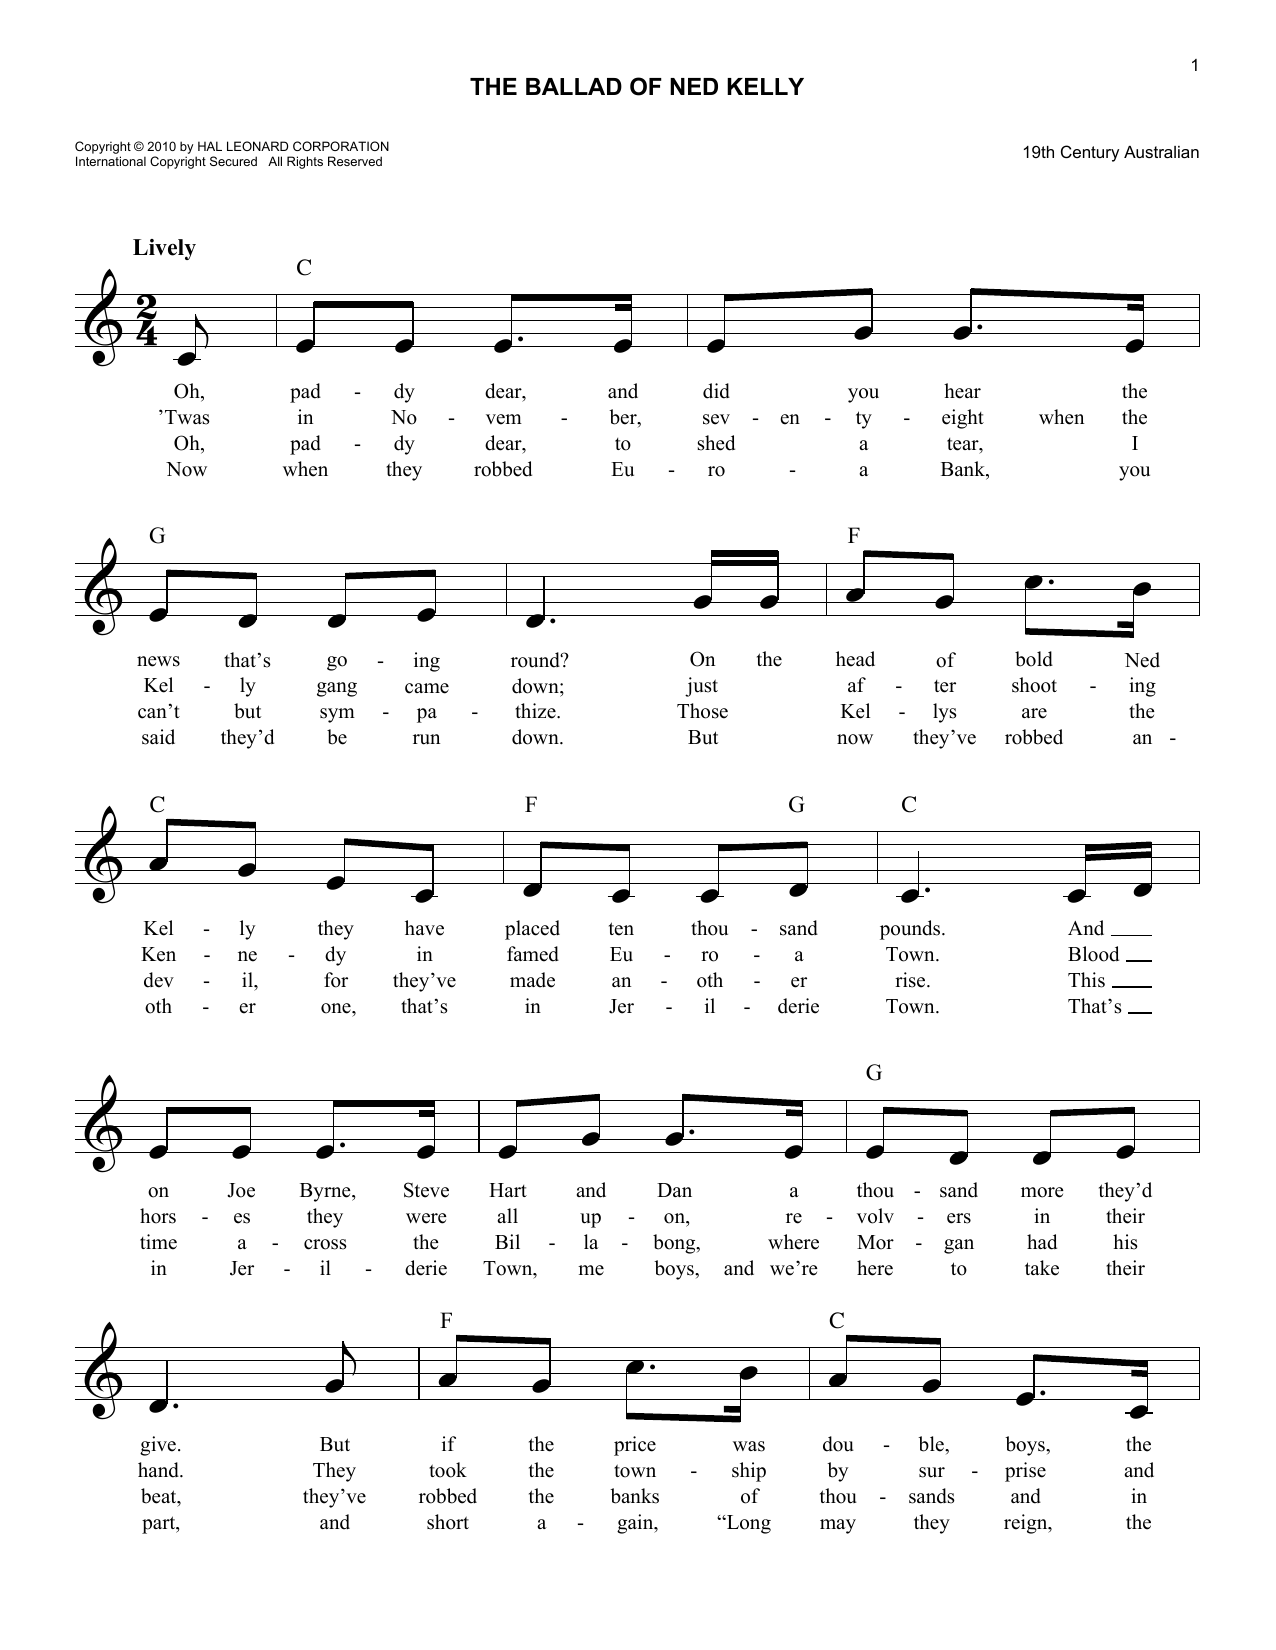 Download Australian Folksong Ballad Of Ned Kelly Sheet Music